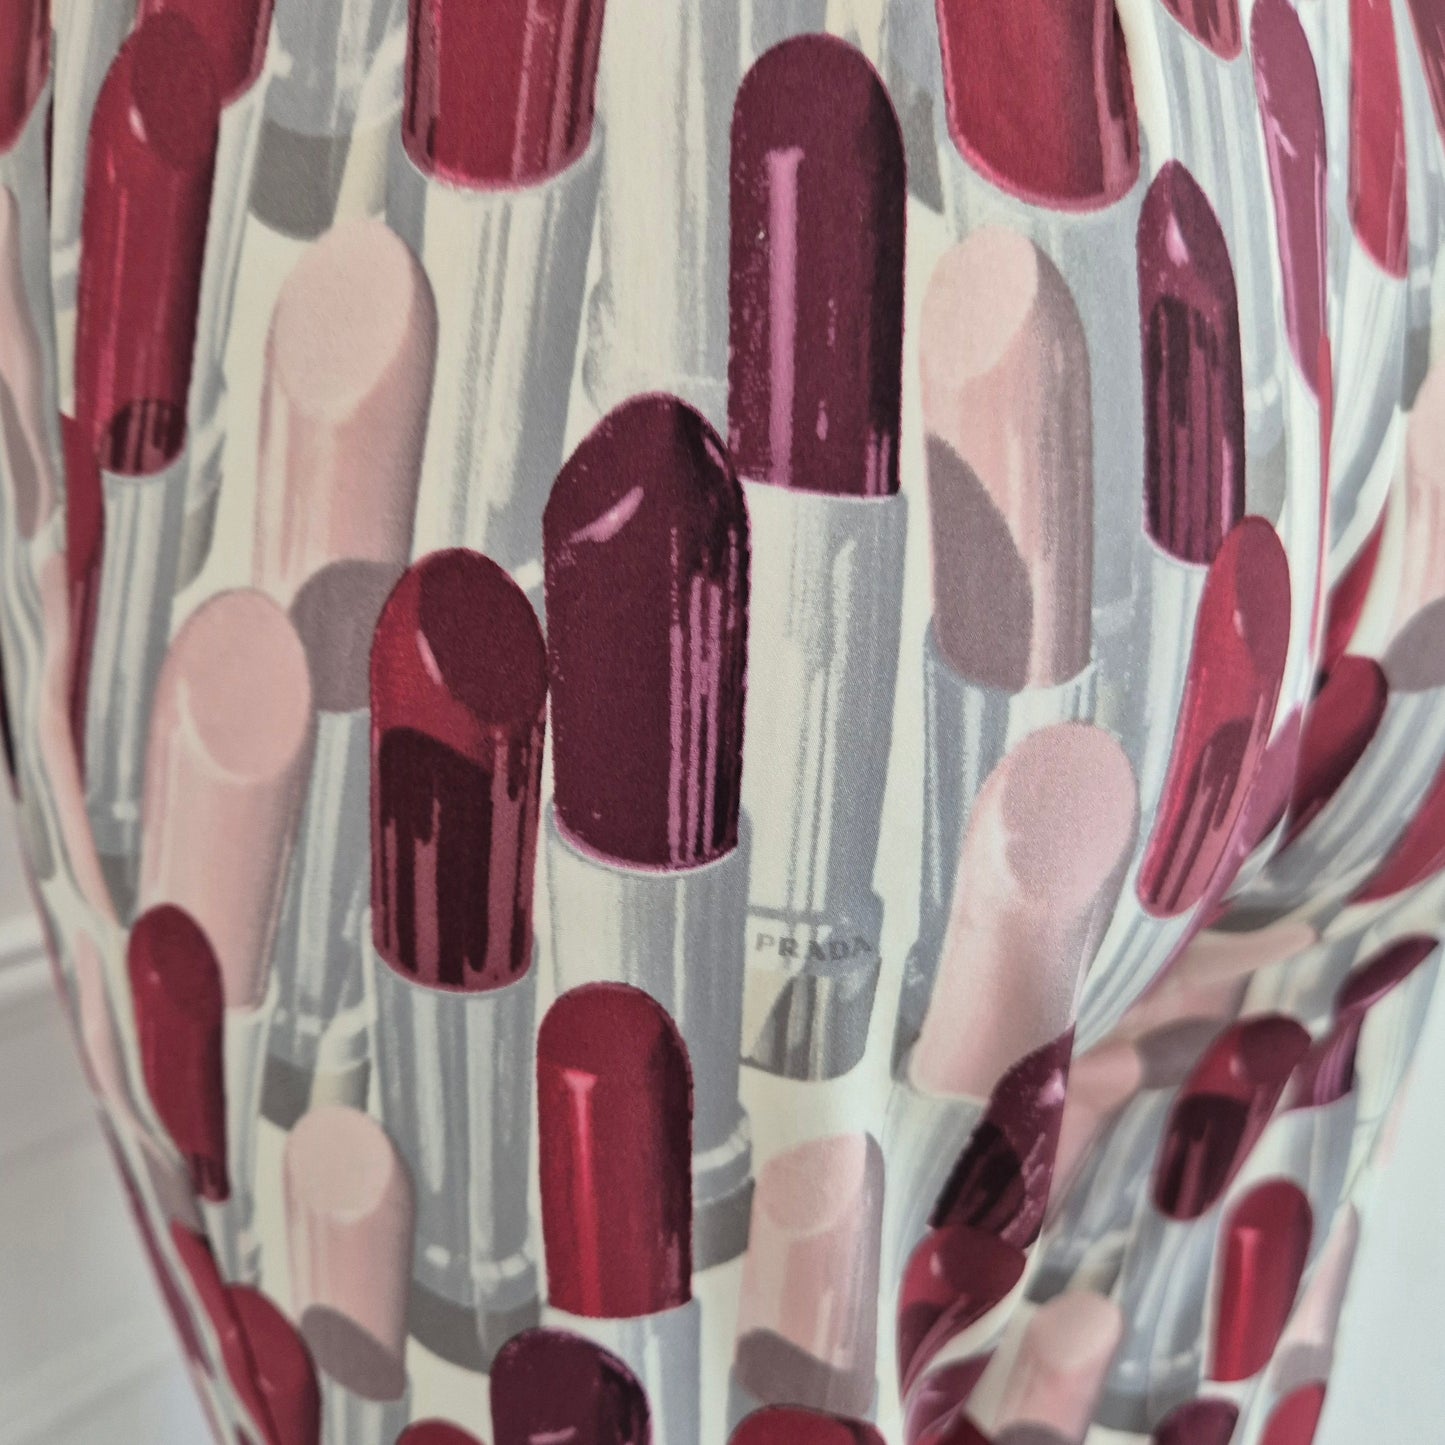 Prada | Pantaloni SS 2000 lipstick print